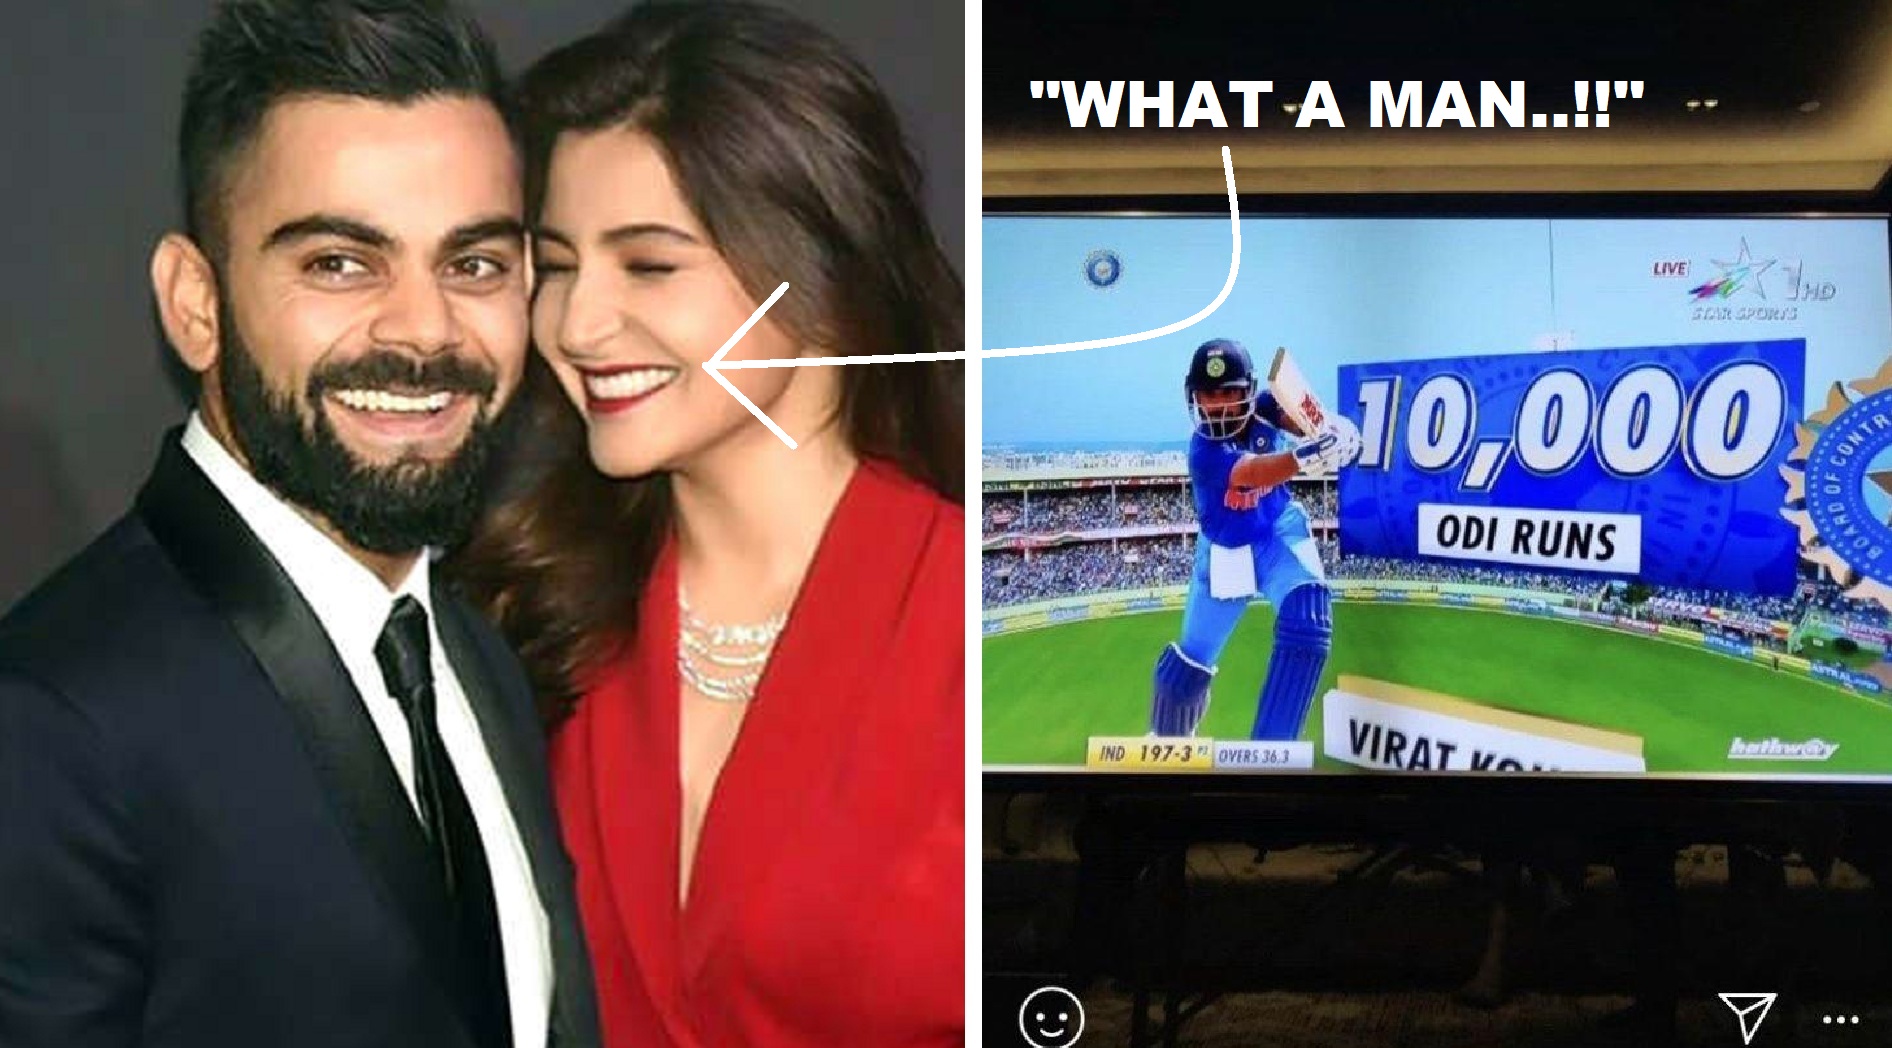 Anushka Sharma Goes Gaga Over Virat Kohli’s Cricket Milestone, “What a Man!”